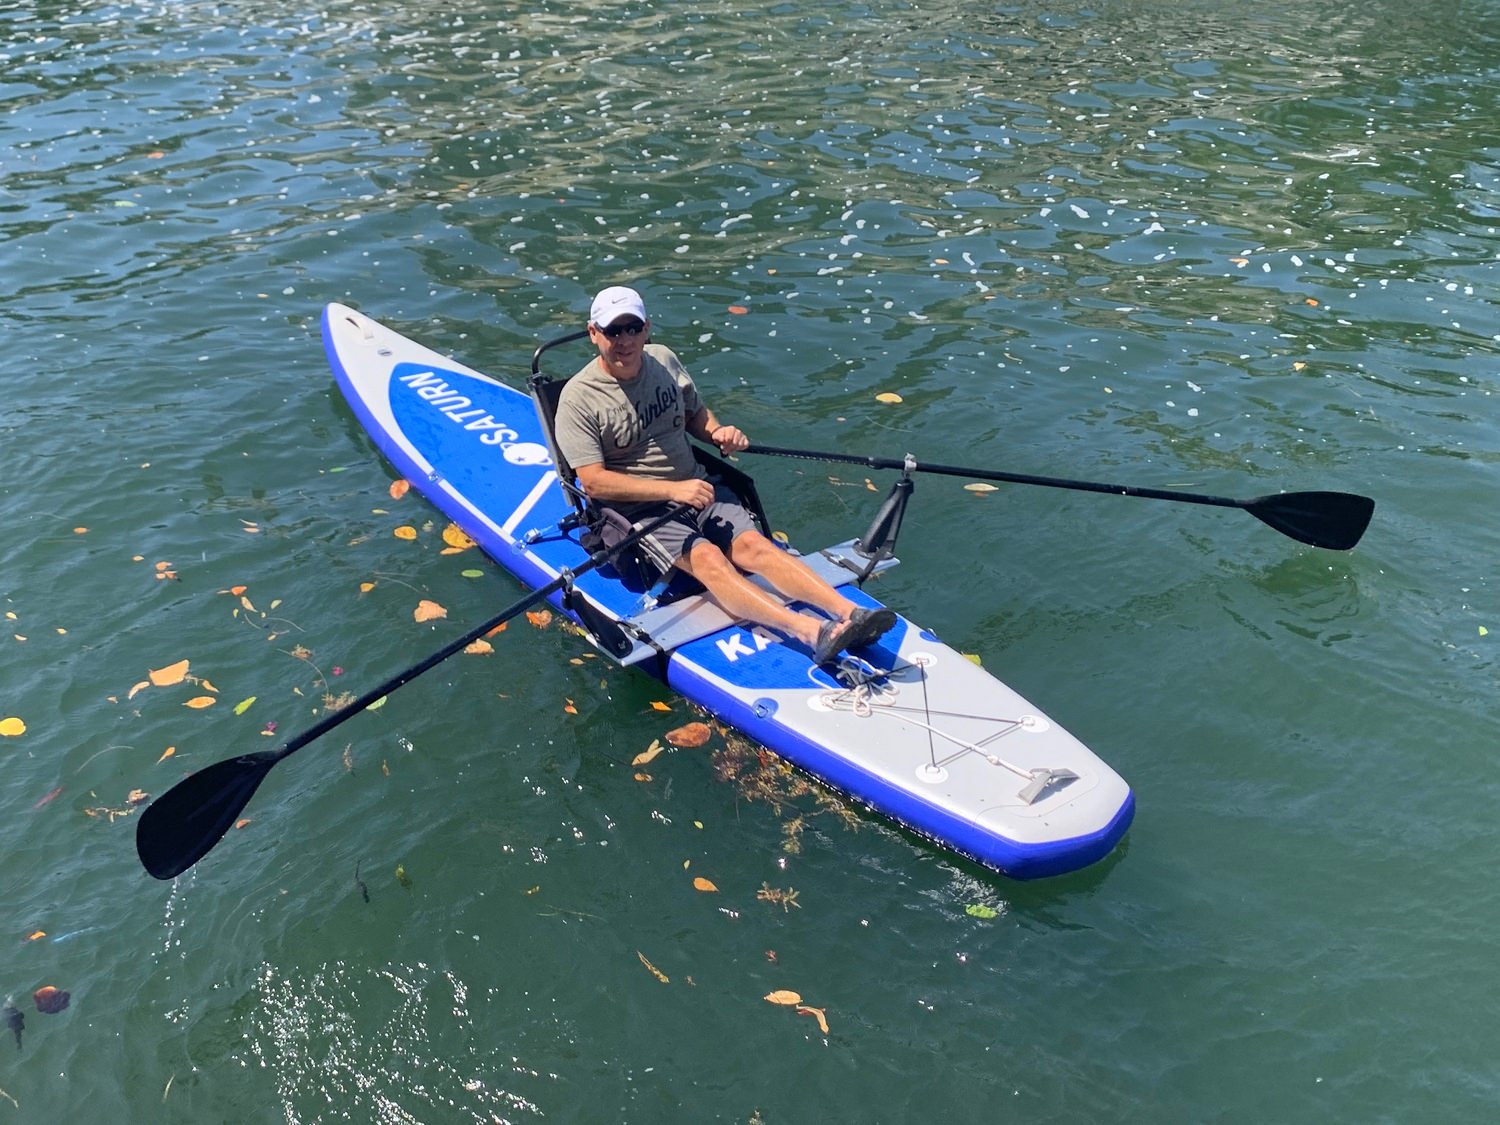 DIY Rowing kit for SUP